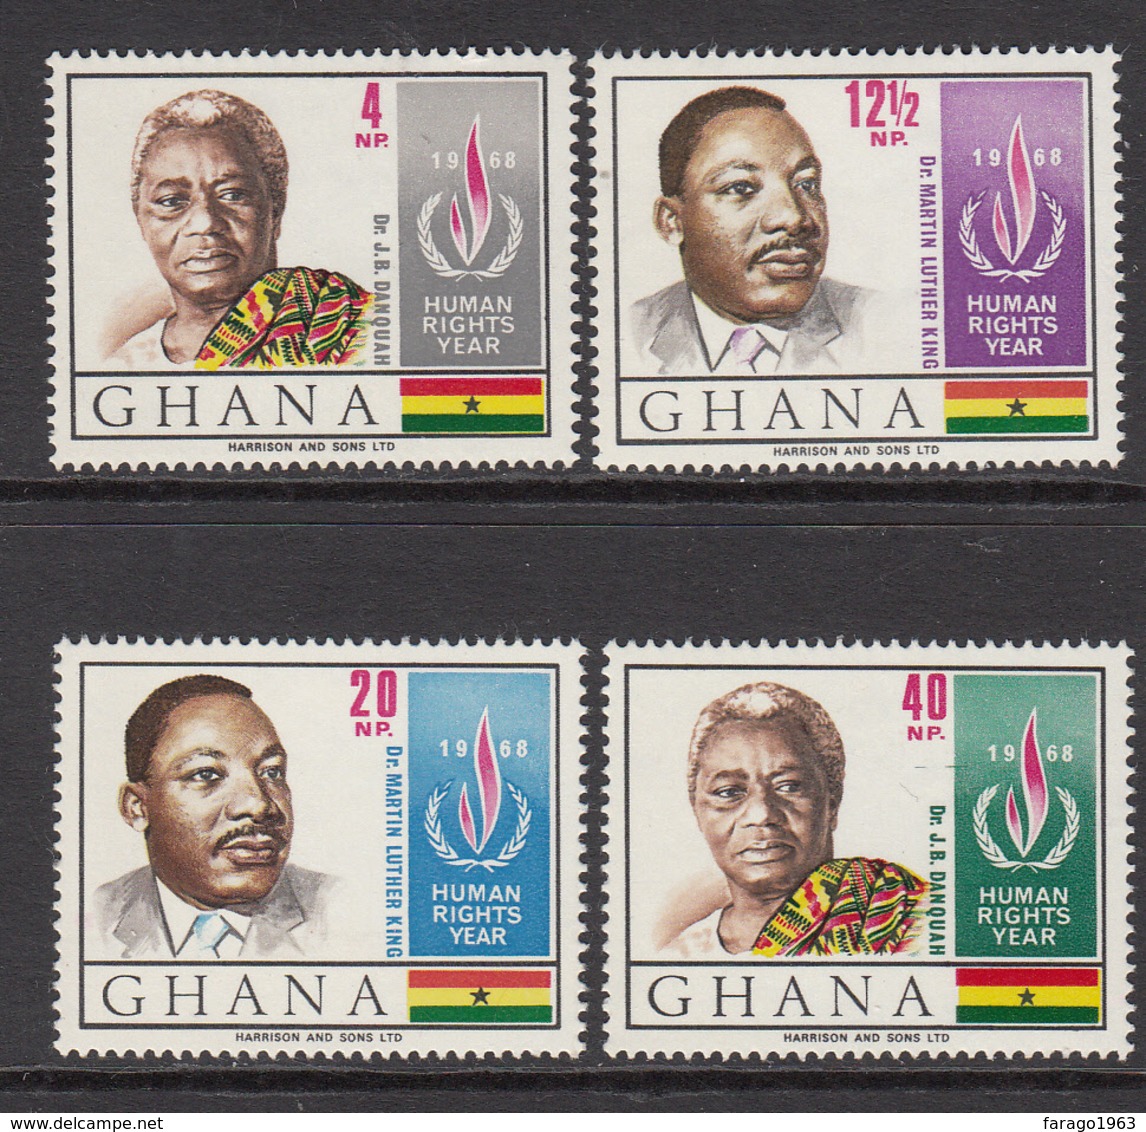 1969 Ghana Human Rights MLK Complete Set Of 4  MNH - Ghana (1957-...)